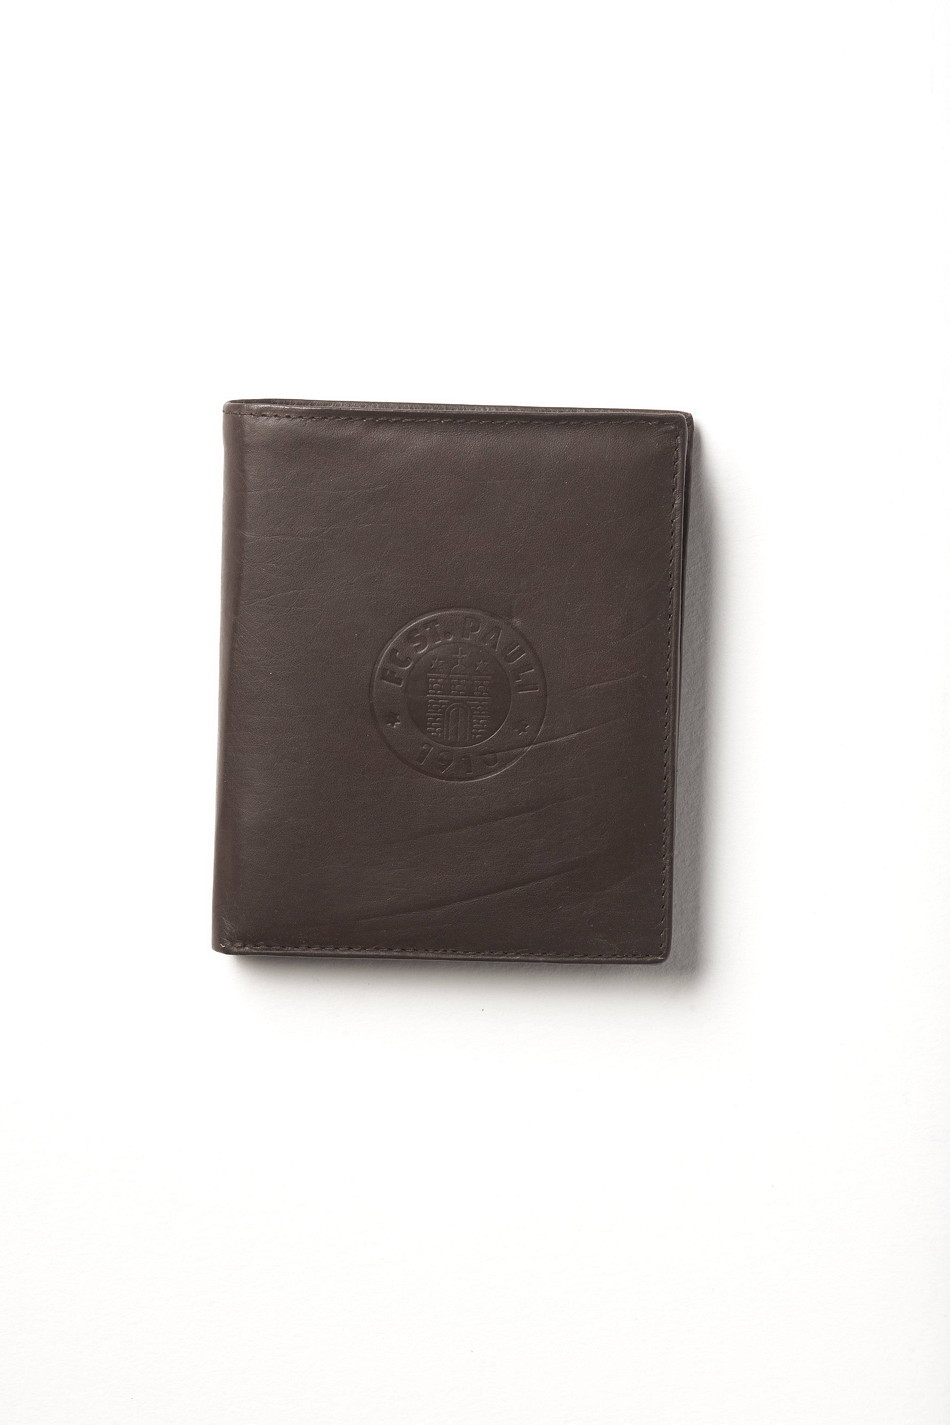 Logo leather wallet